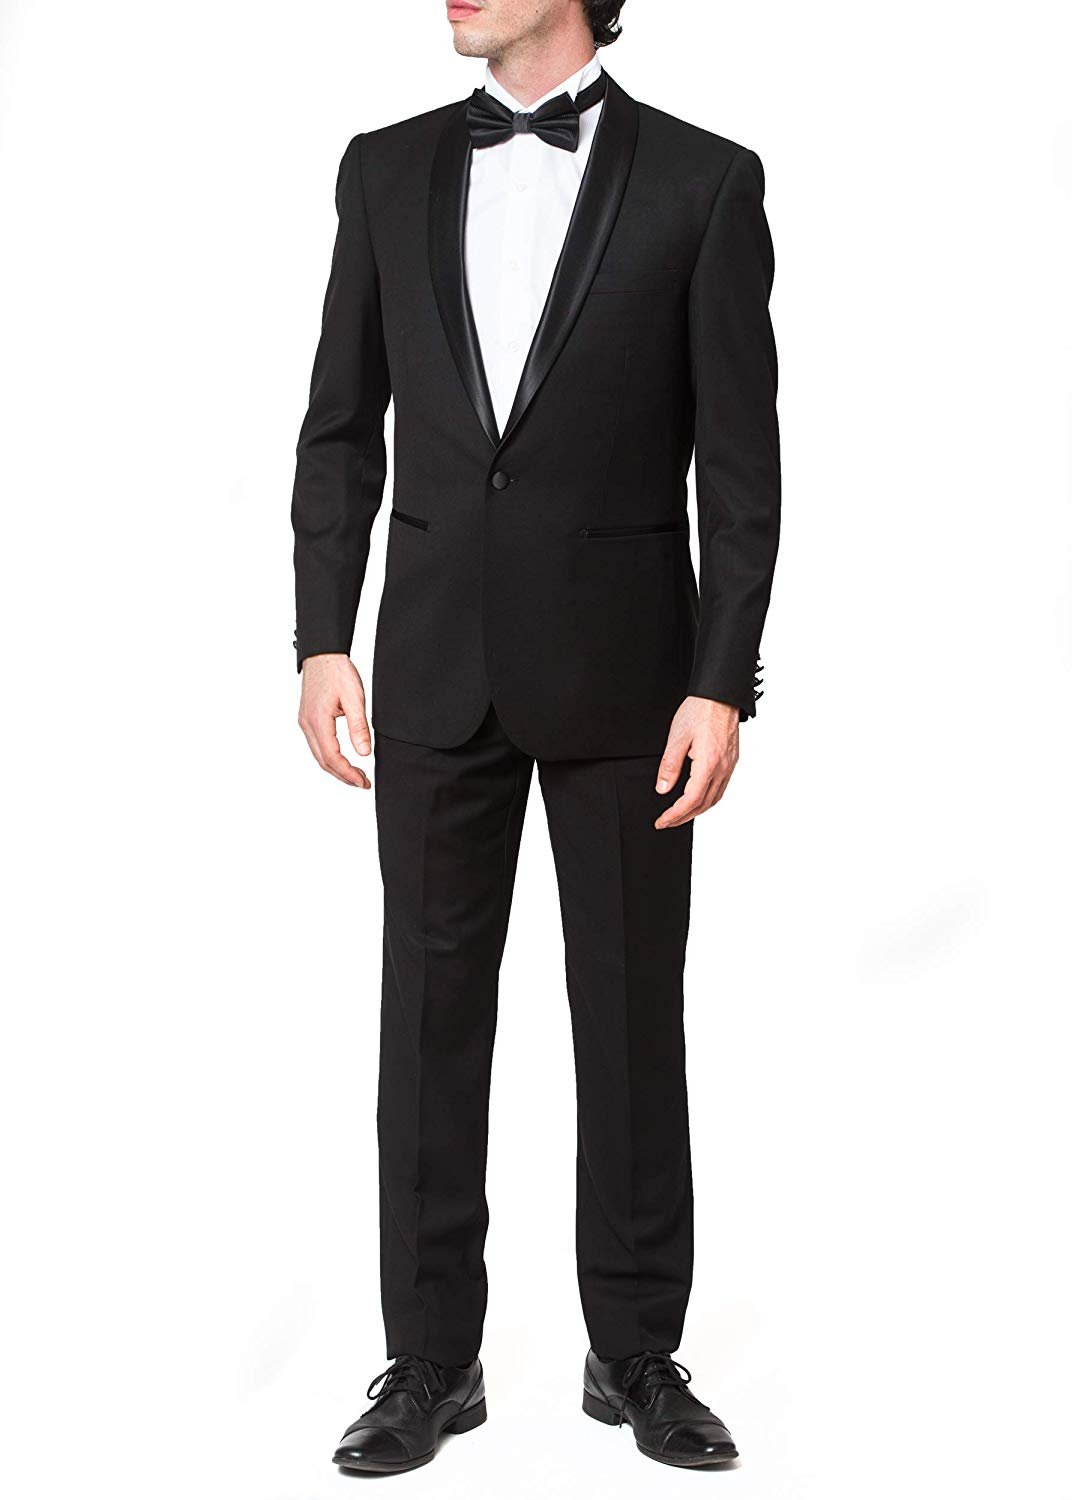 Giorgio Fiorelli Men’s G47815/1 One Button Modern Fit Two-Piece Shawl Collar Tuxedo Suit Set - Black - 44S - image 1 of 5